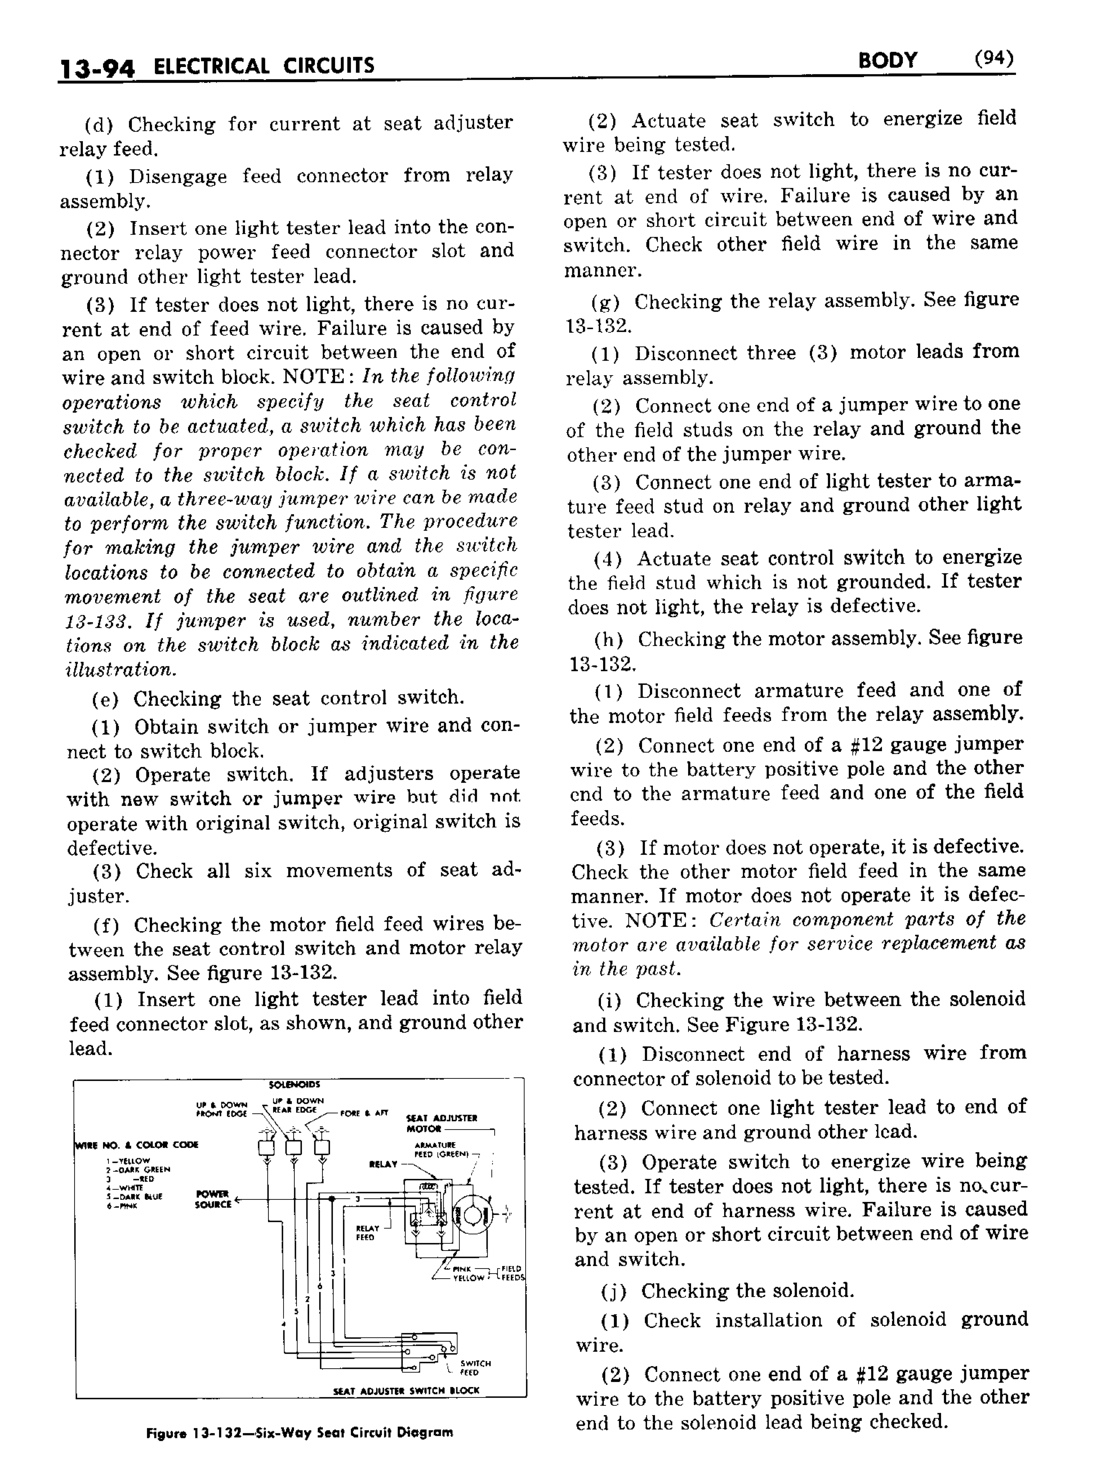 n_1958 Buick Body Service Manual-095-095.jpg